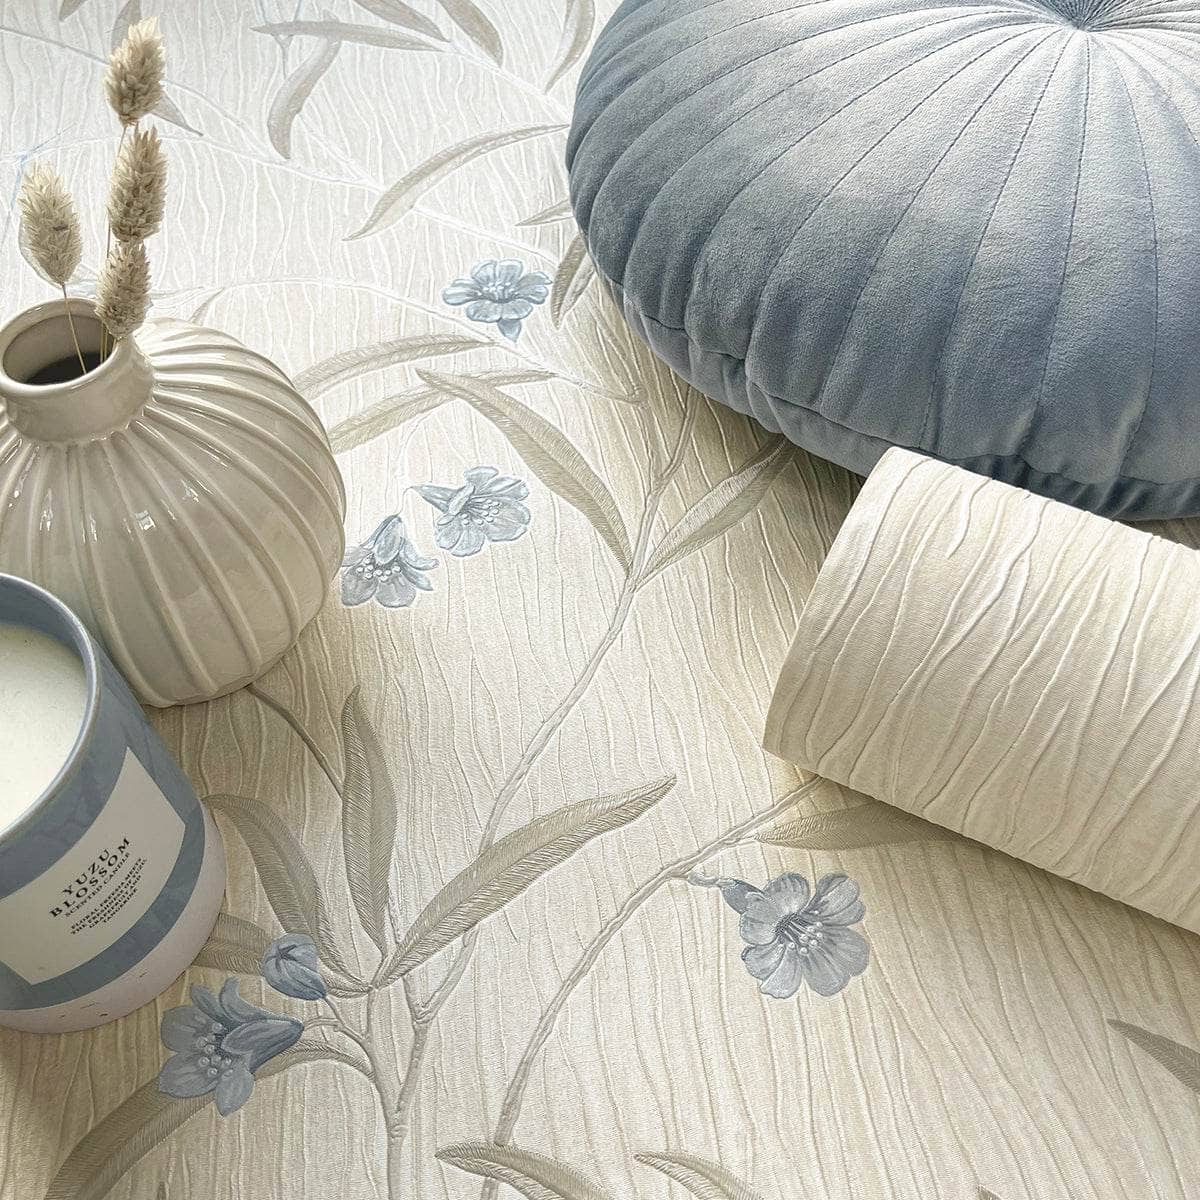 Wallpaper  -  Belgravia Tiffany Floral Cream & Blue Wallpaper -41333  -  60009420